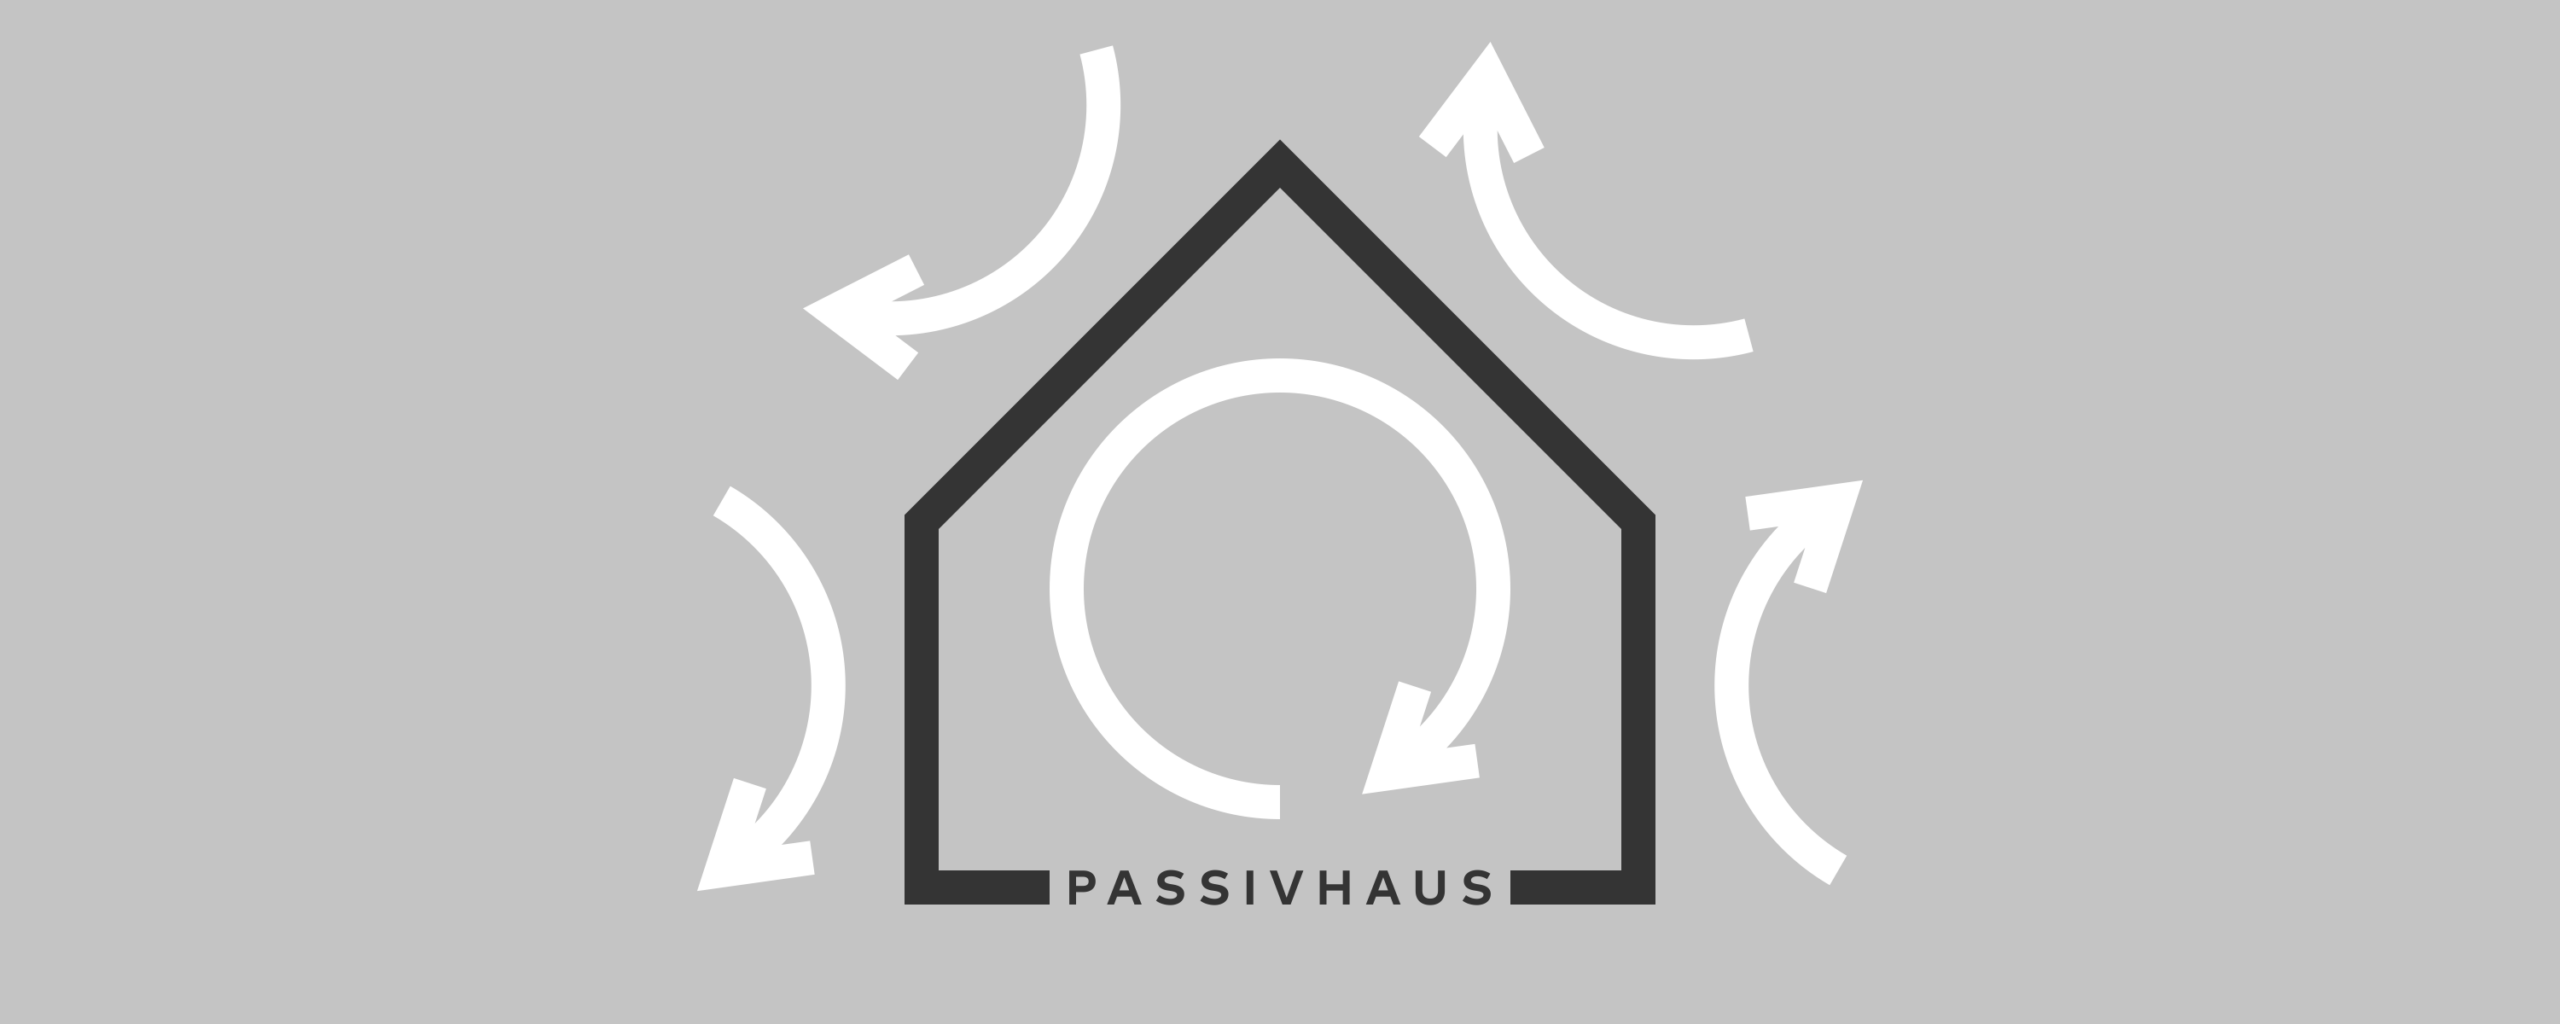 El estándar Passivhaus